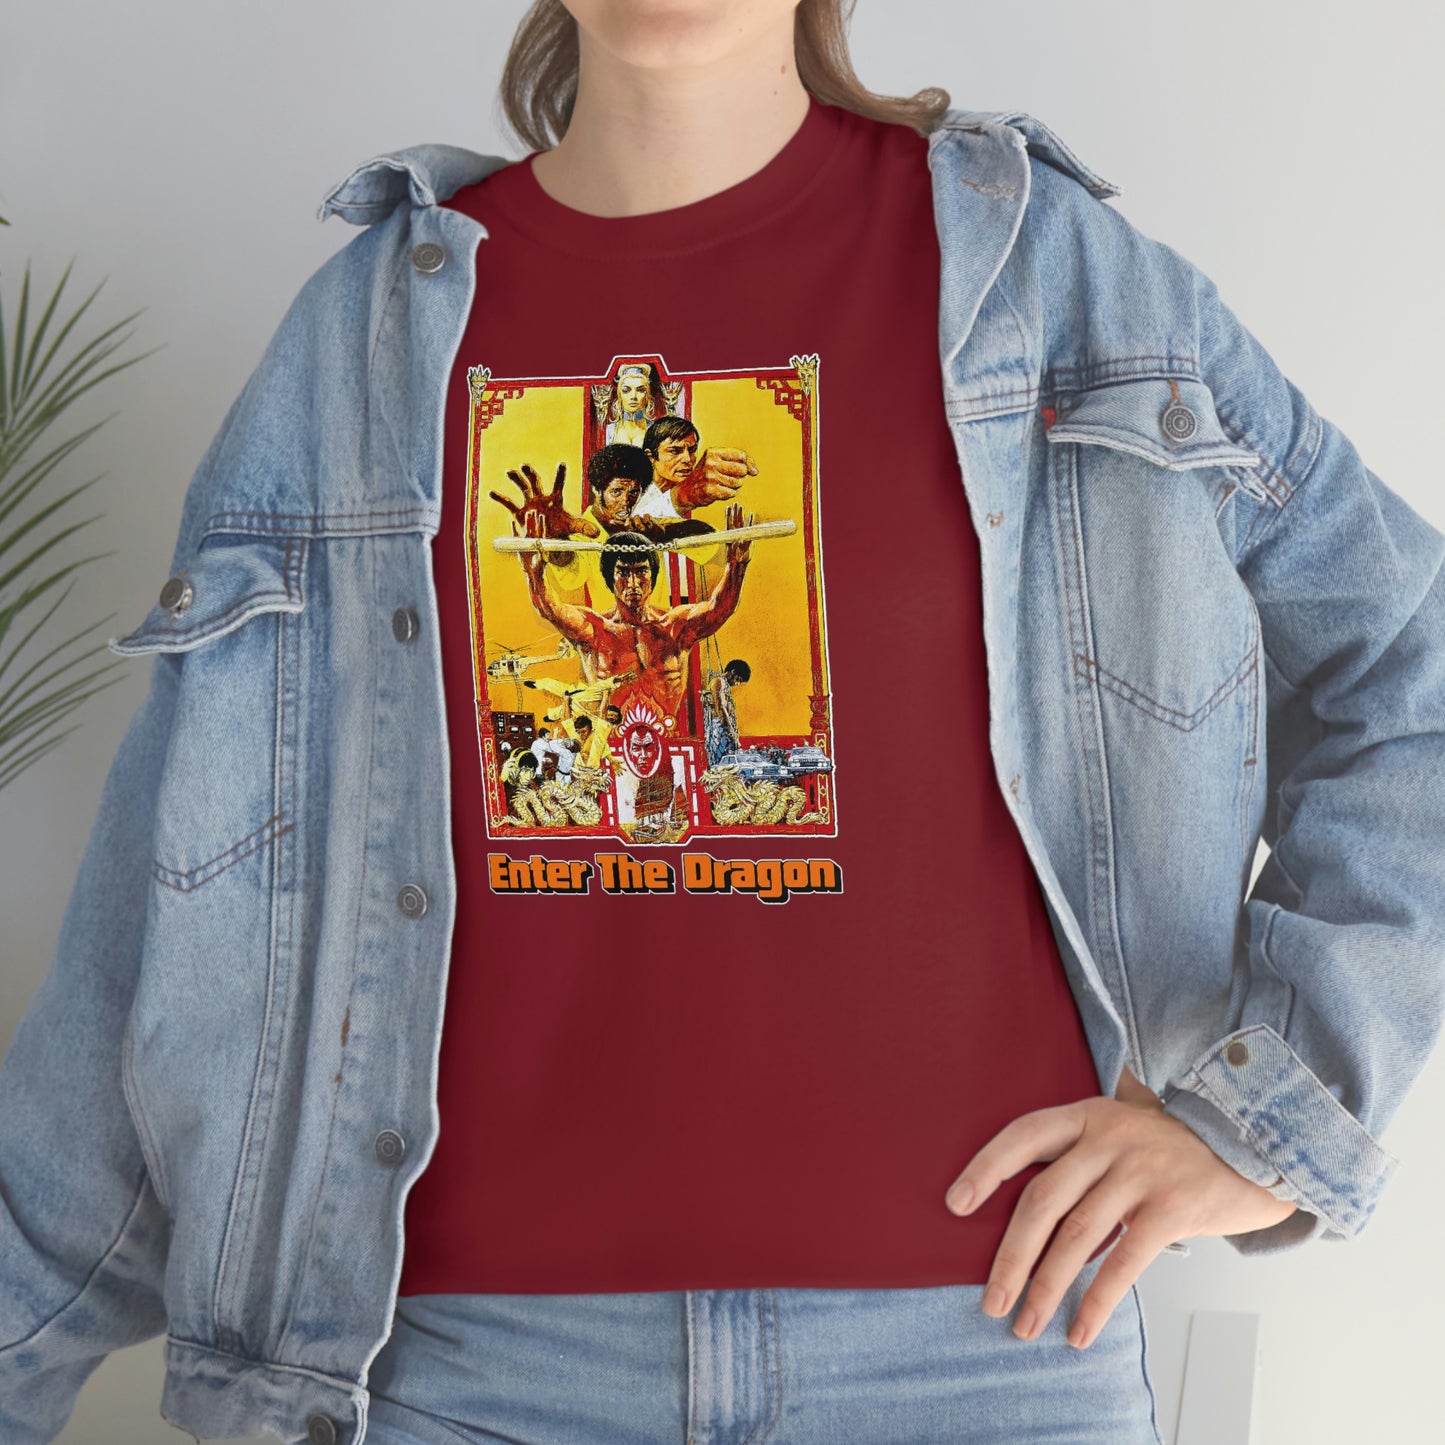 Enter the Dragon T-Shirt